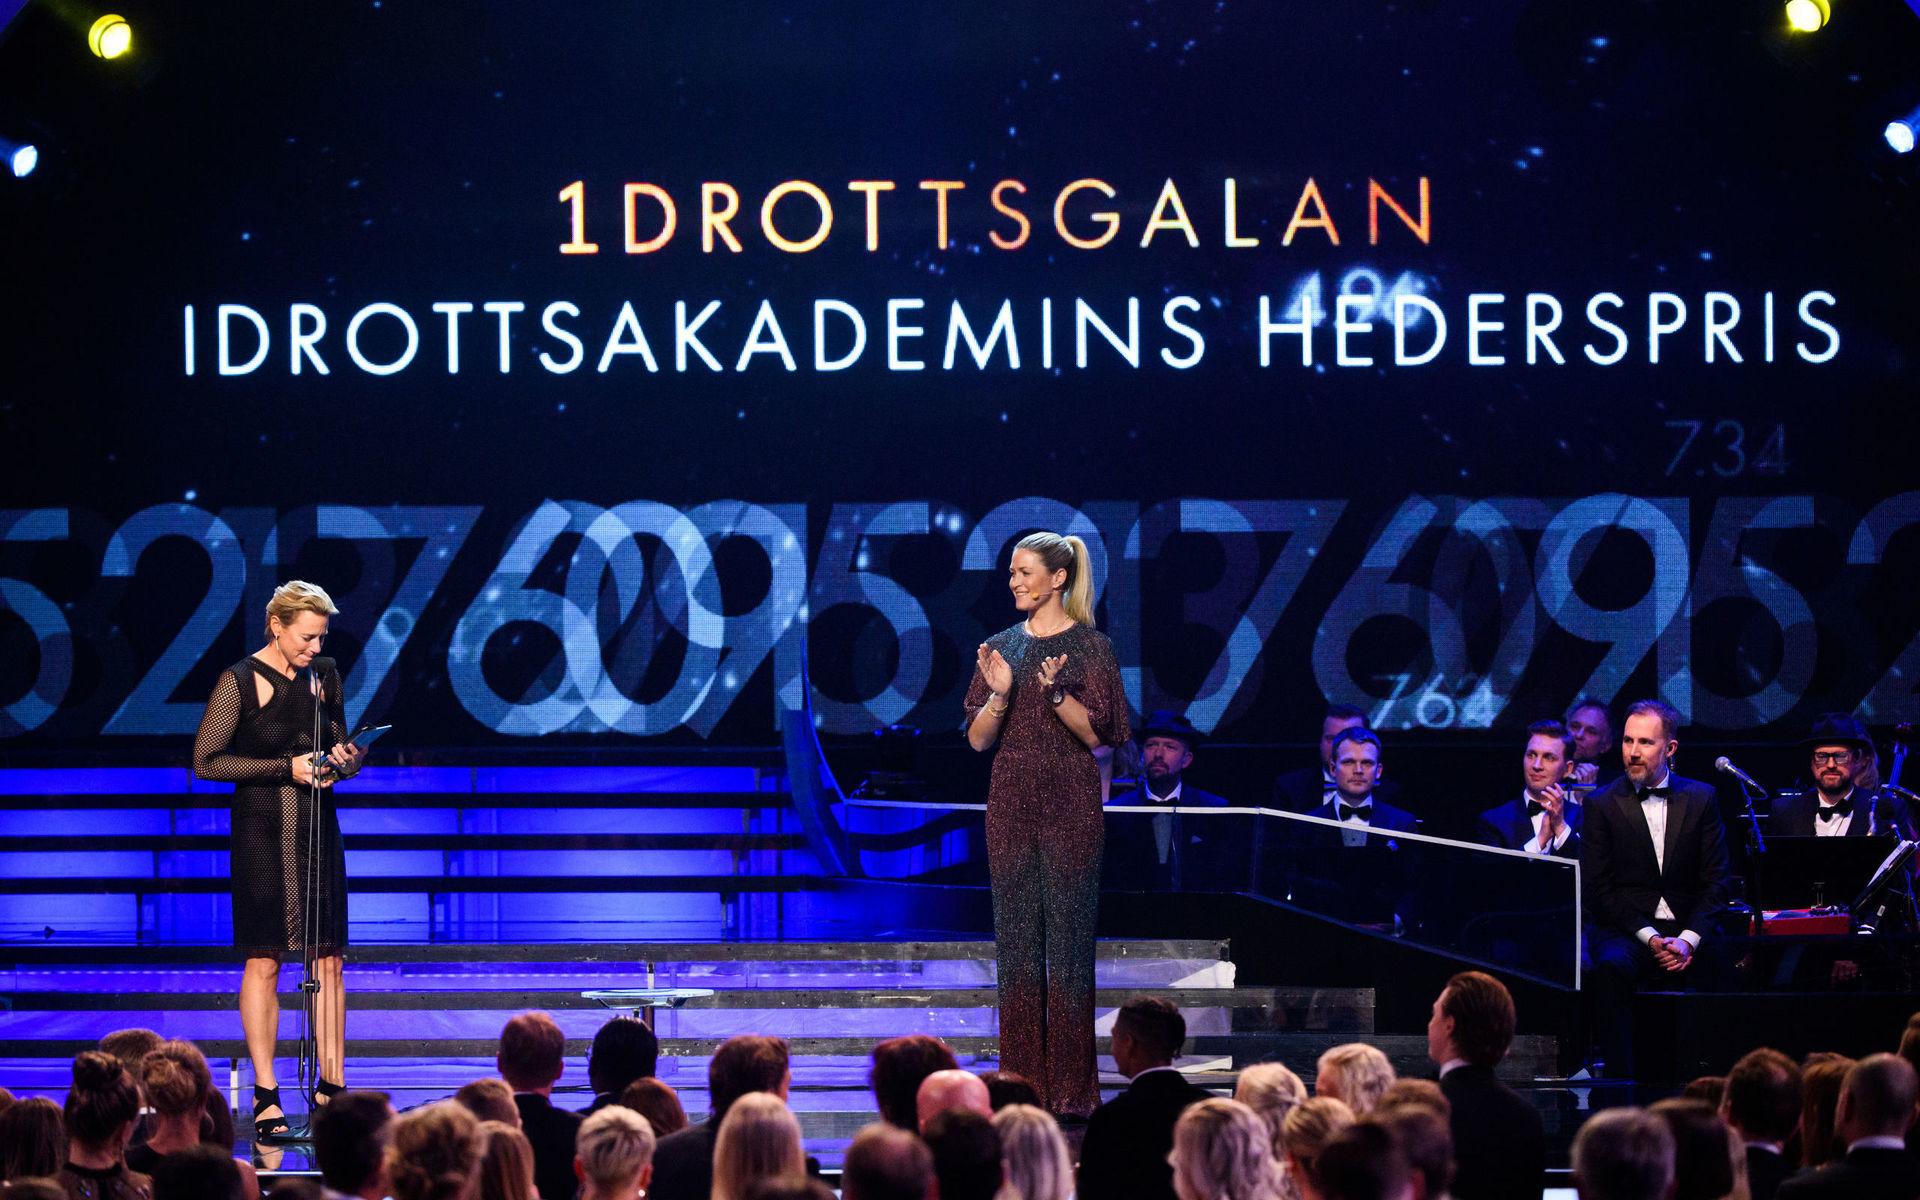 Annika Sörenstam tilldelas Idrottsakademins hederspris av prisutdelaren Suzann Pettersen.